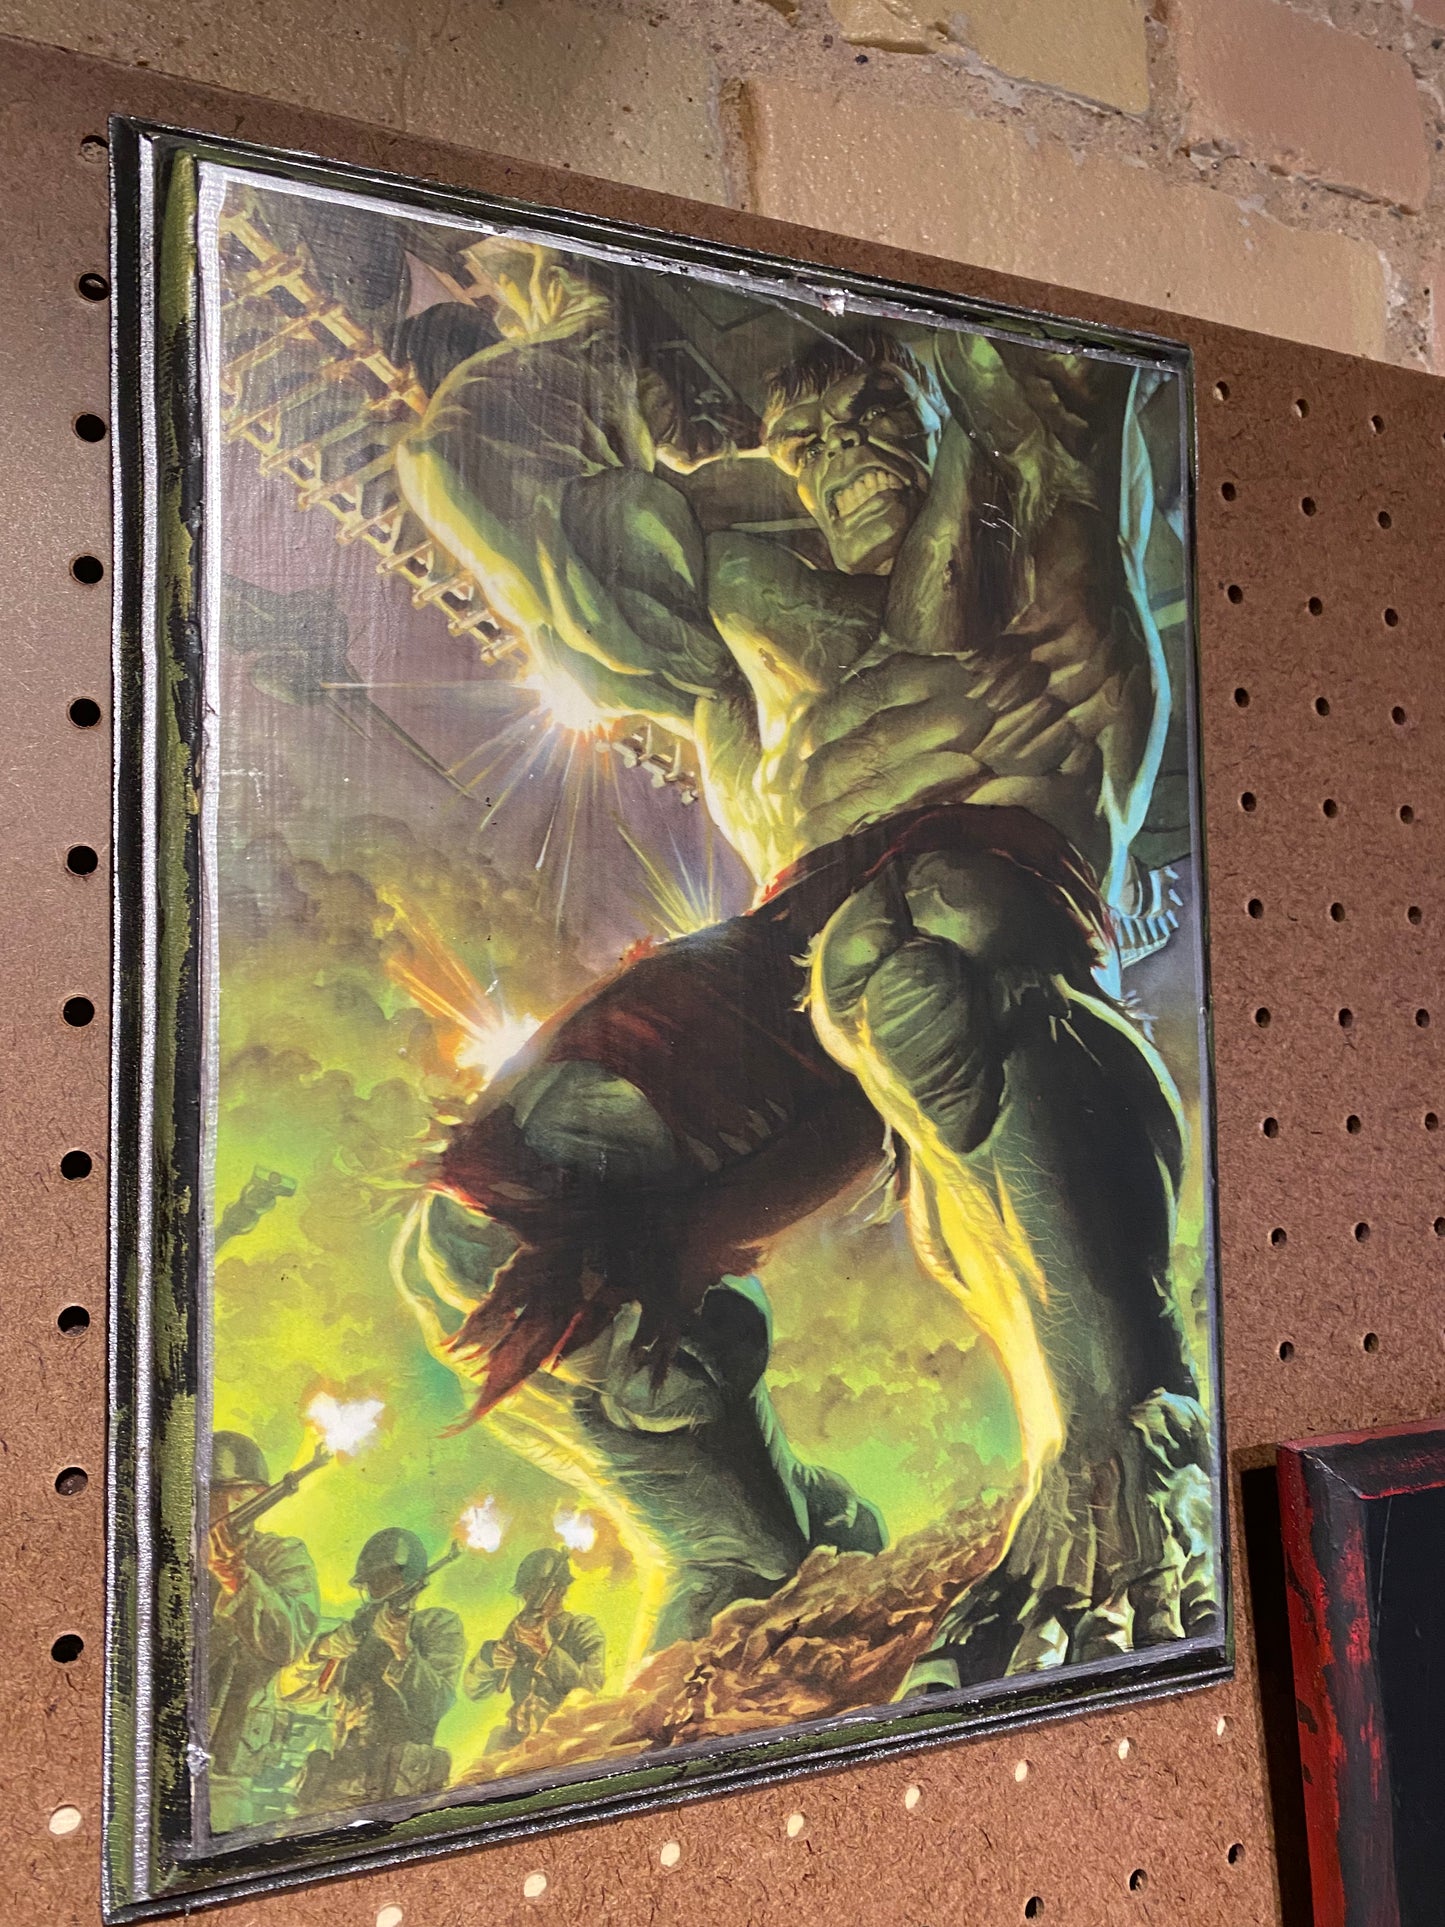 SALE: Incredible Hulk Alex Ross Handmade Wood Art Plaque 12x9